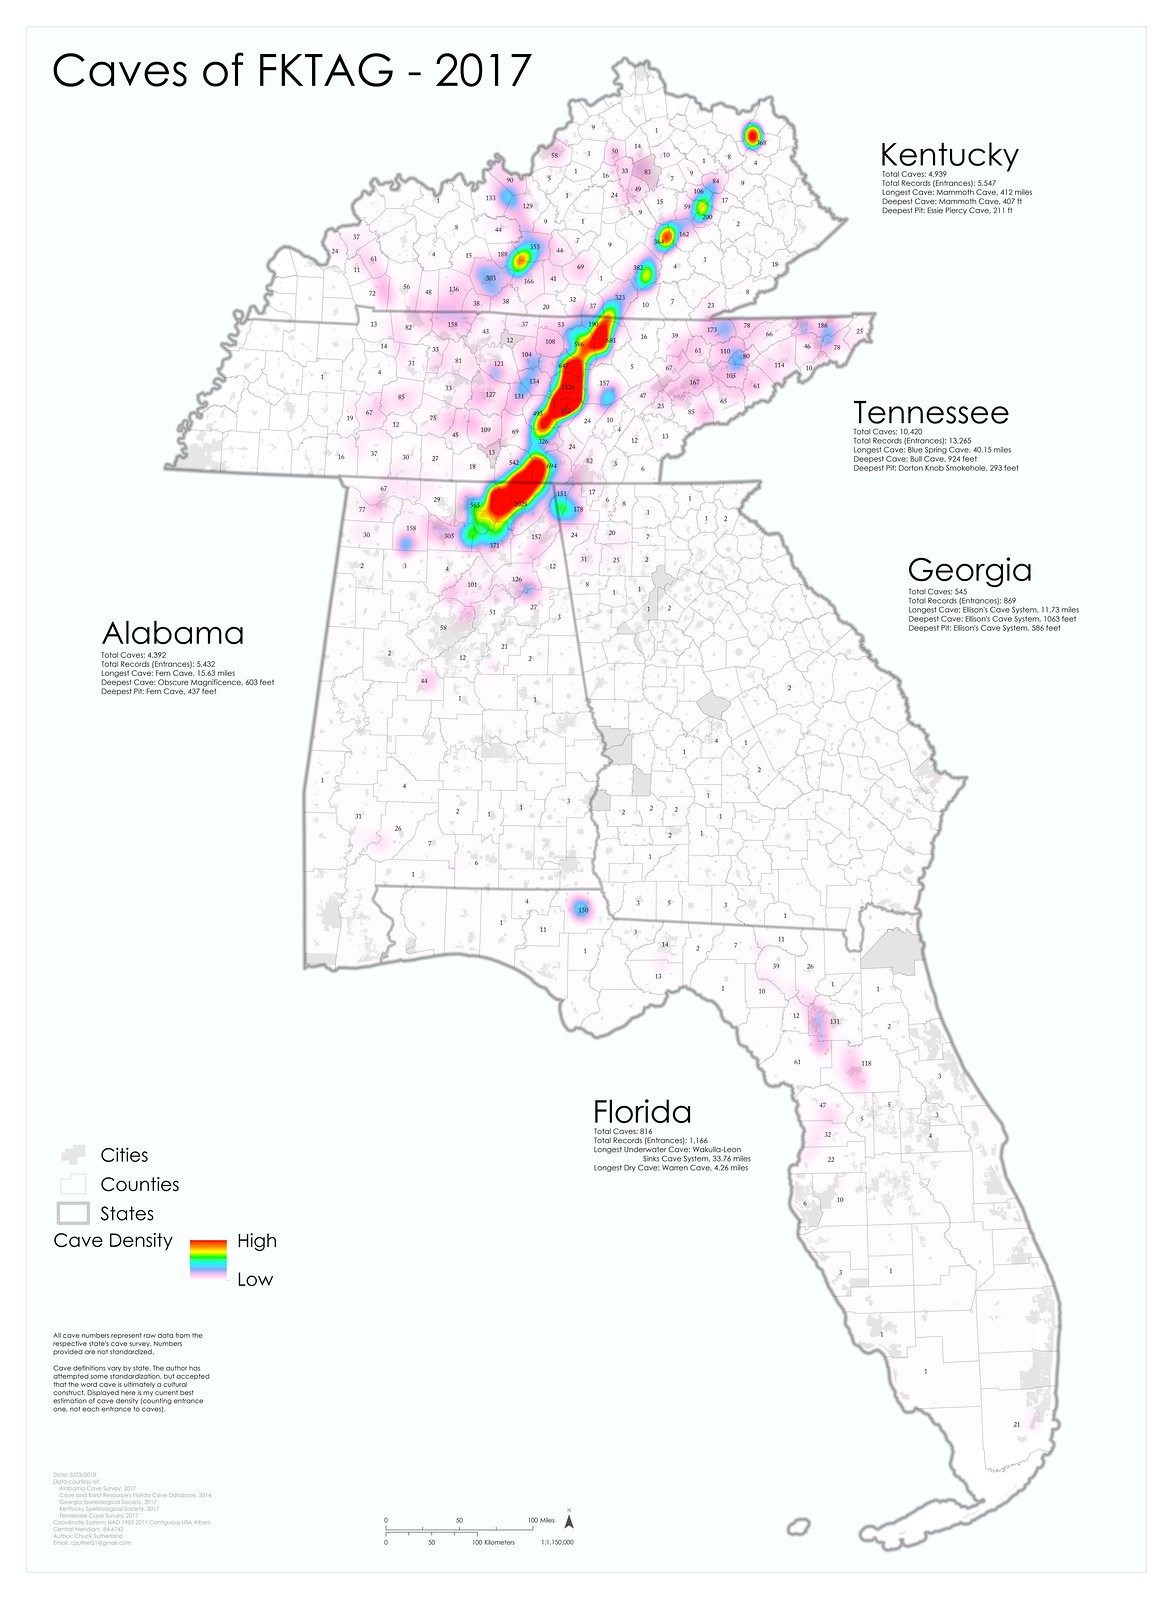 Cave Density of Alabama, Florida, Kentucky, Georgia, and Tennessee